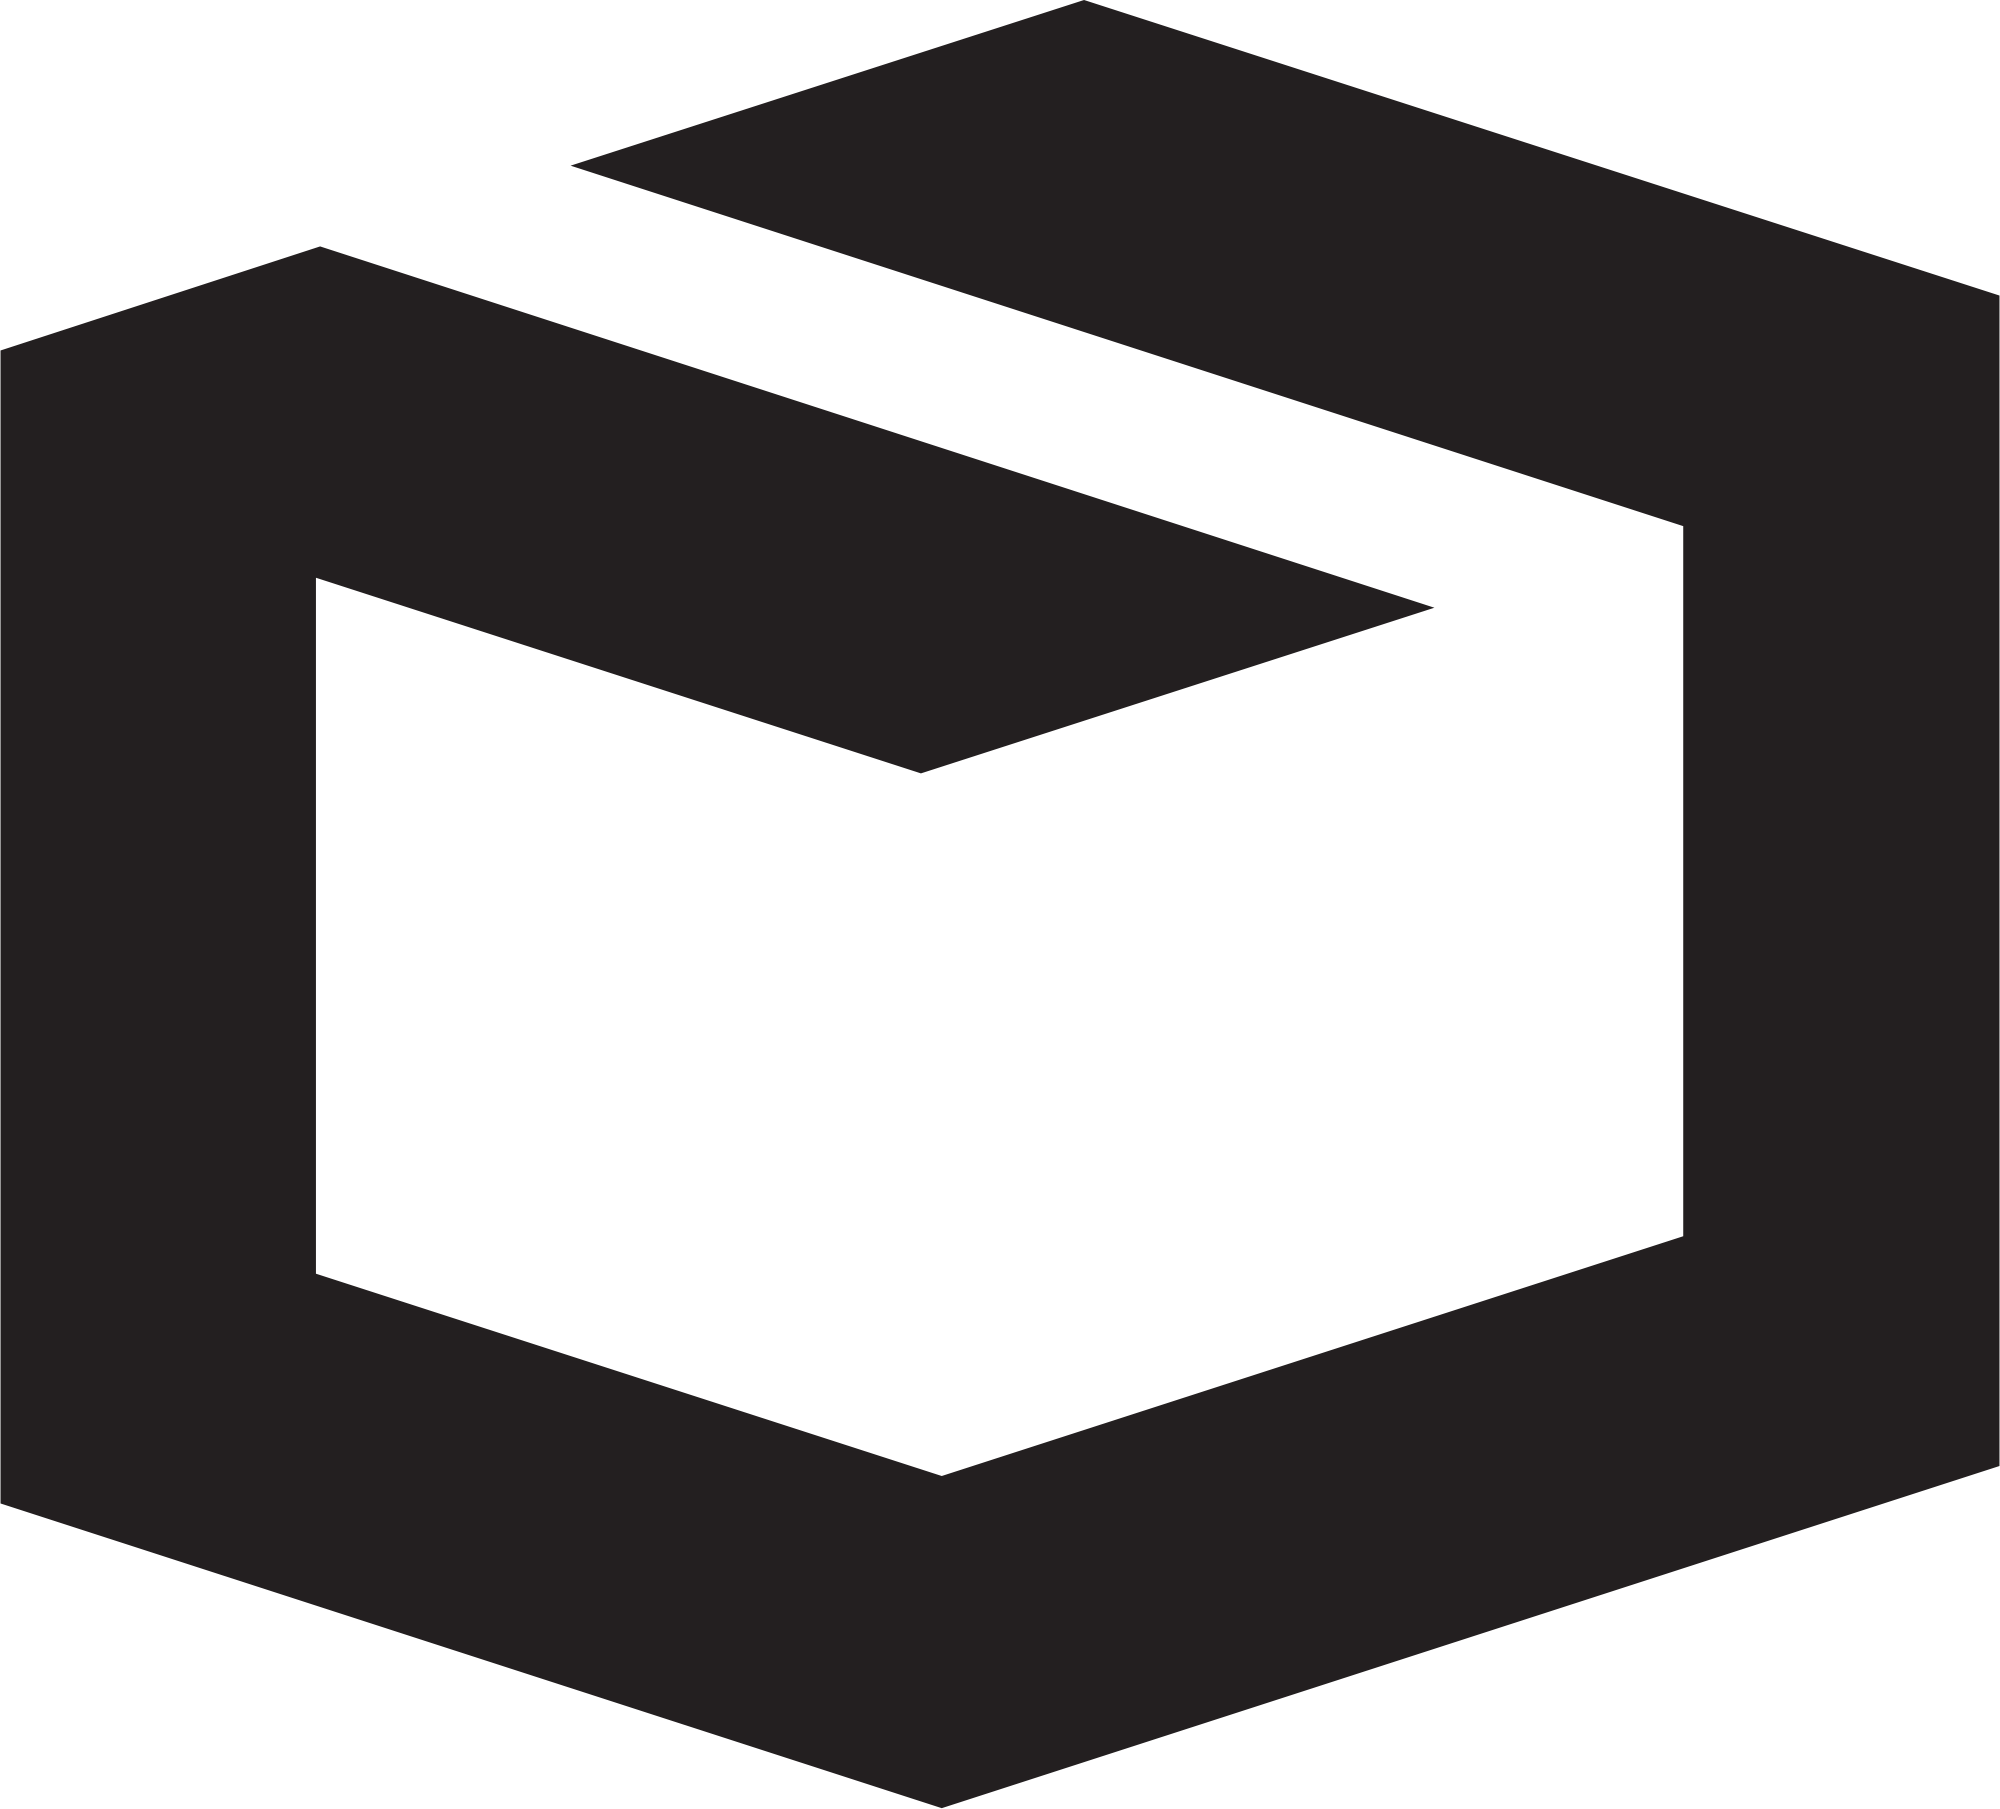 Abstract Black Box Design